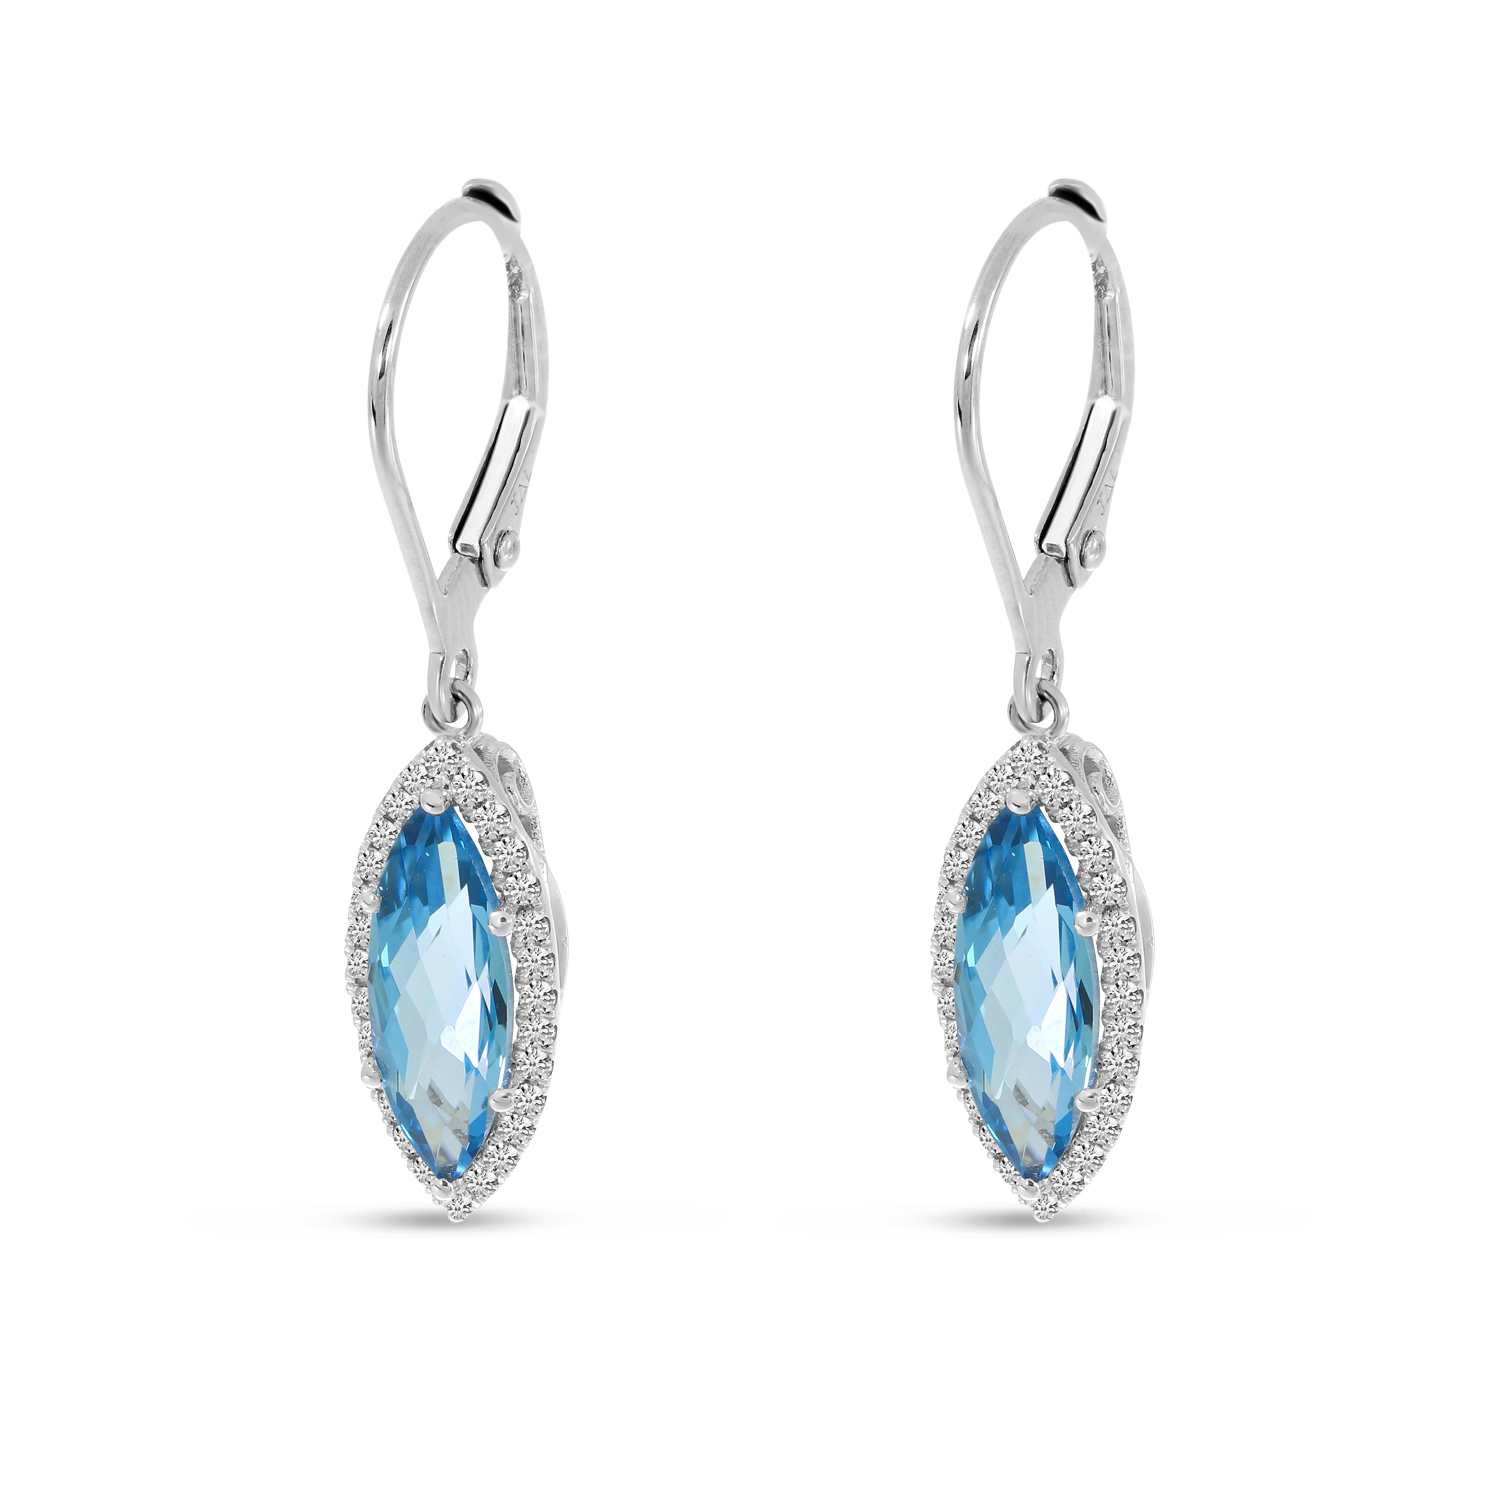 14K White Gold Blue Topaz Marquis Diamond Halo Leverback Earrings